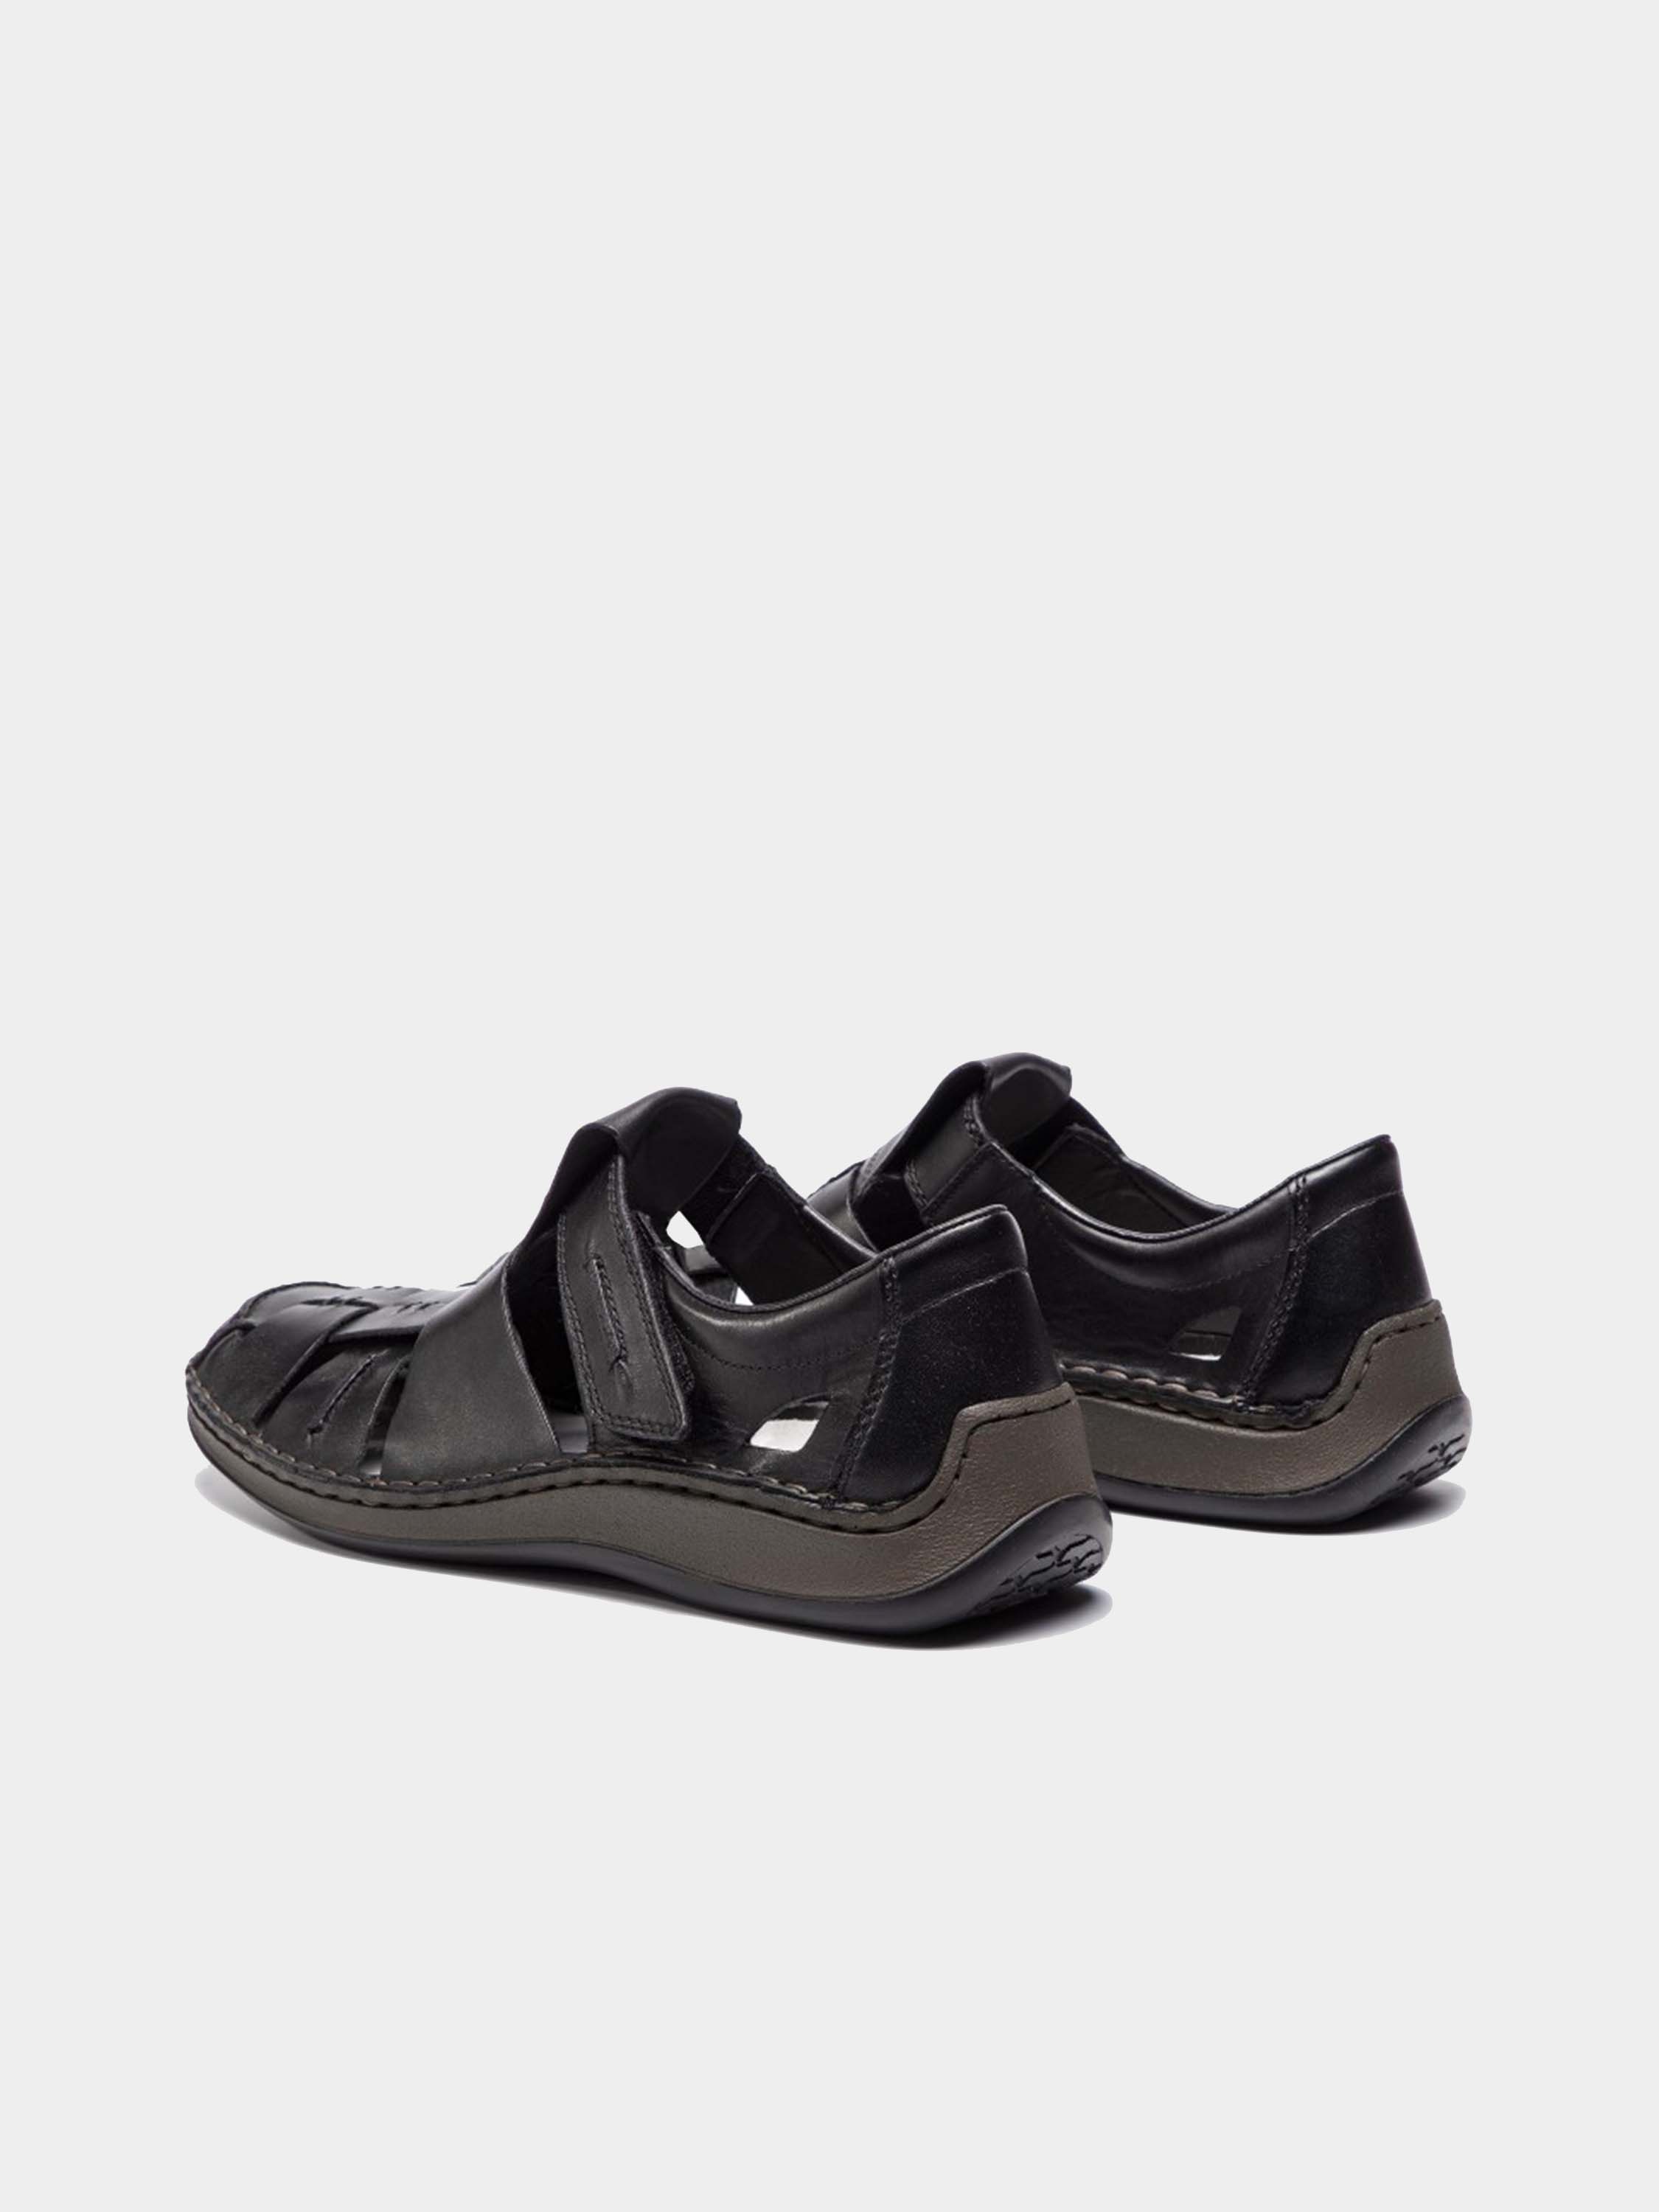 Rieker 05275 Men's Hook and Loop Leather Shoes #color_Black